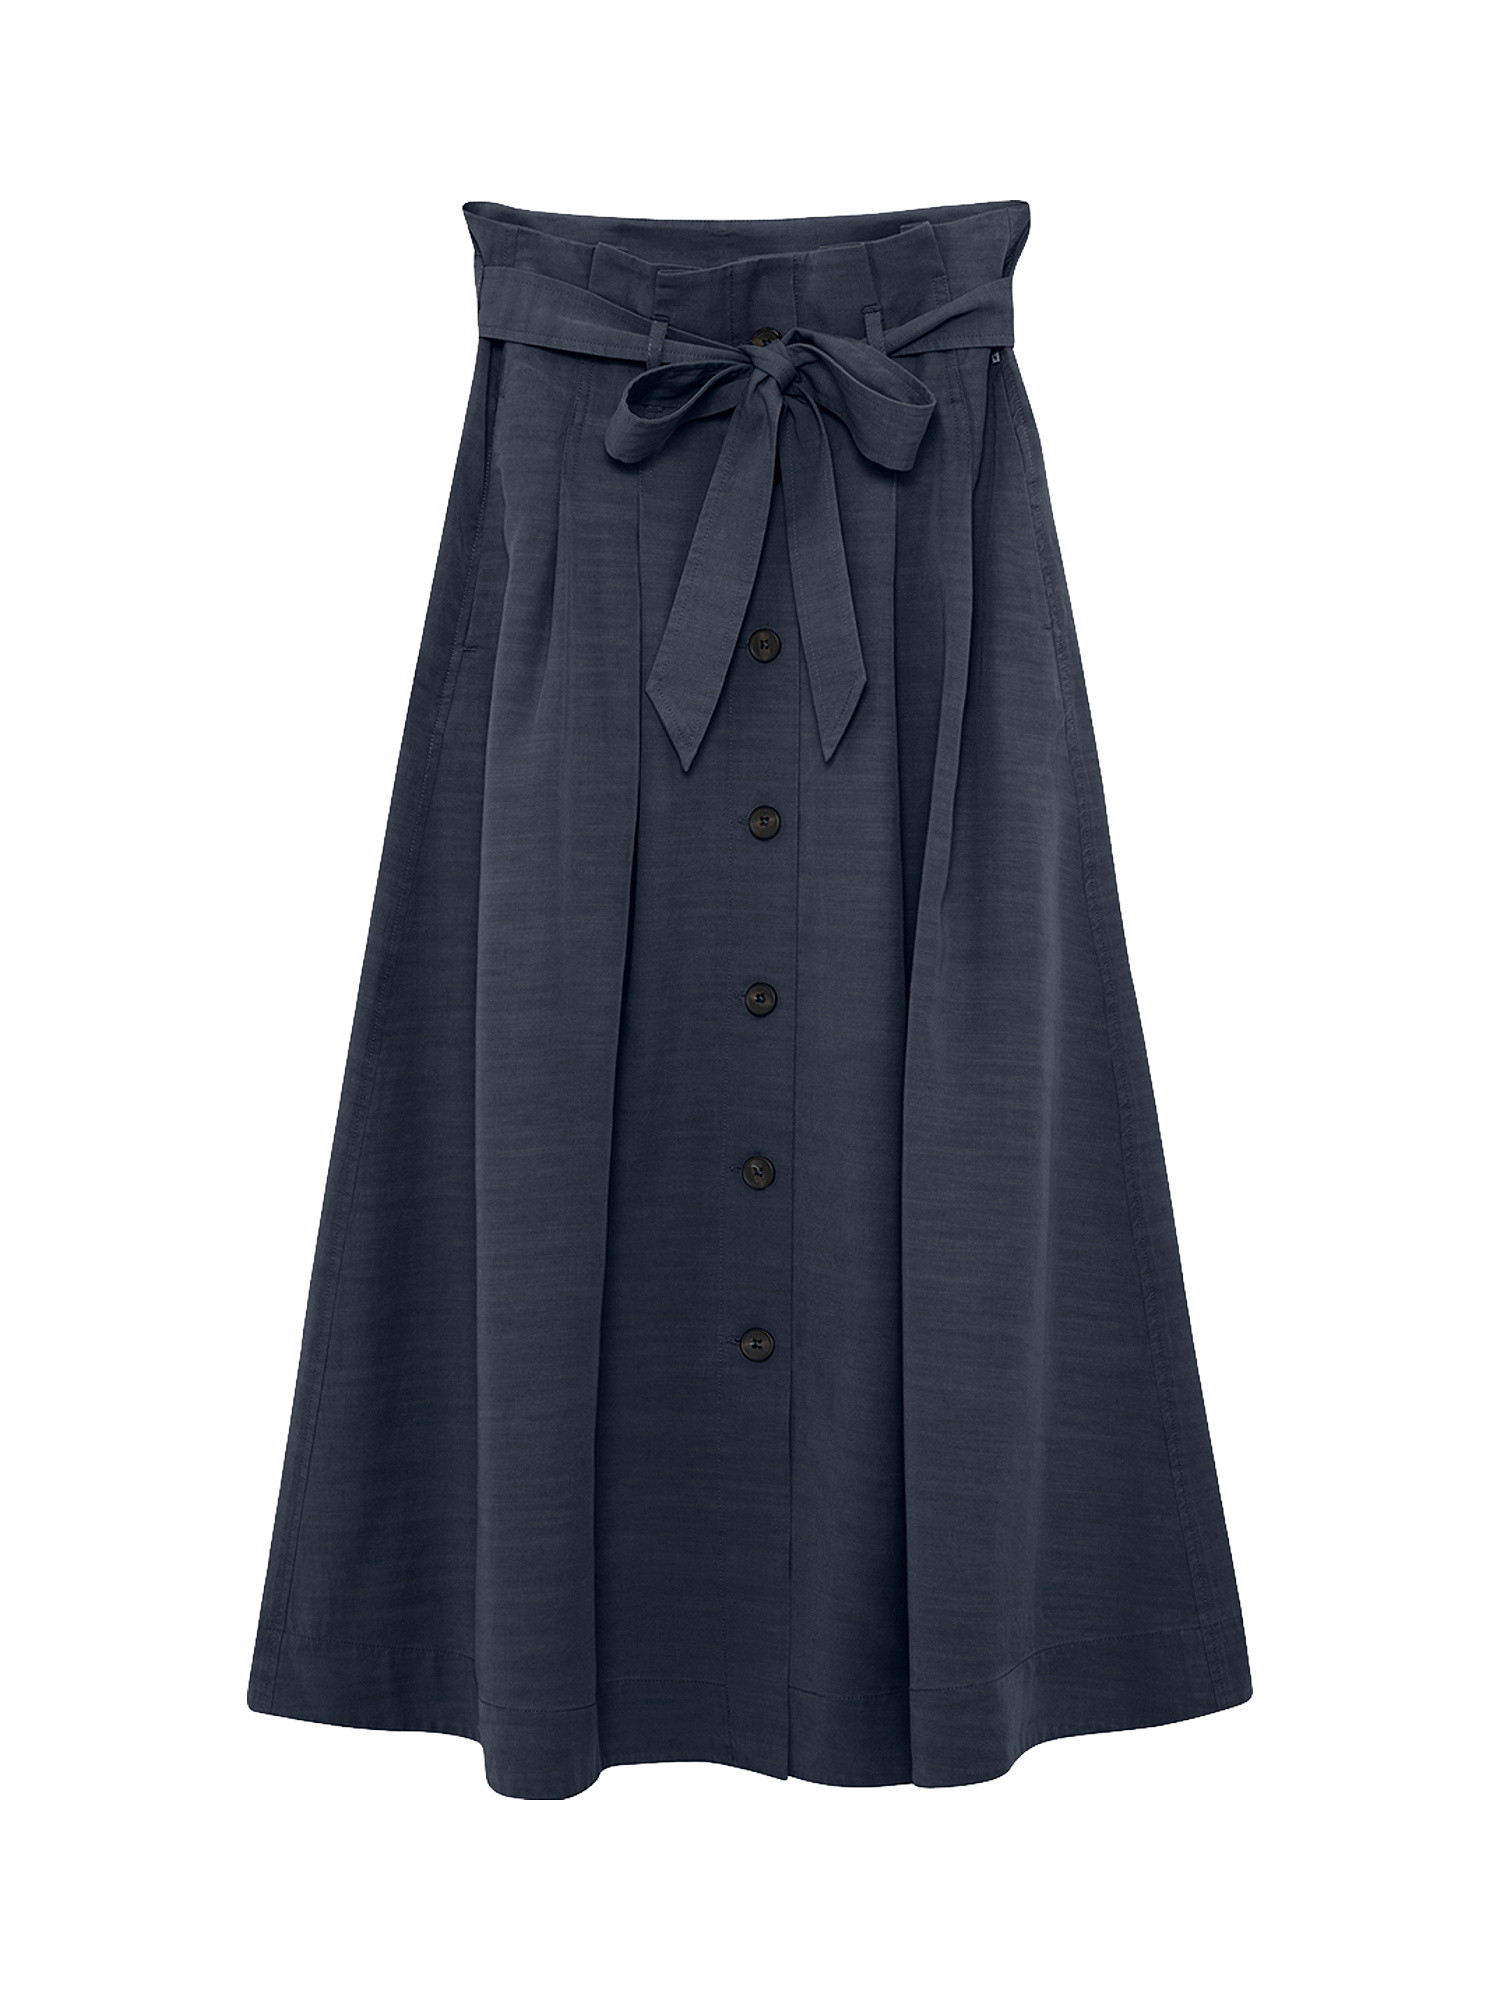 Ecoalf - Midi skirt, Dark Blue, large image number 0